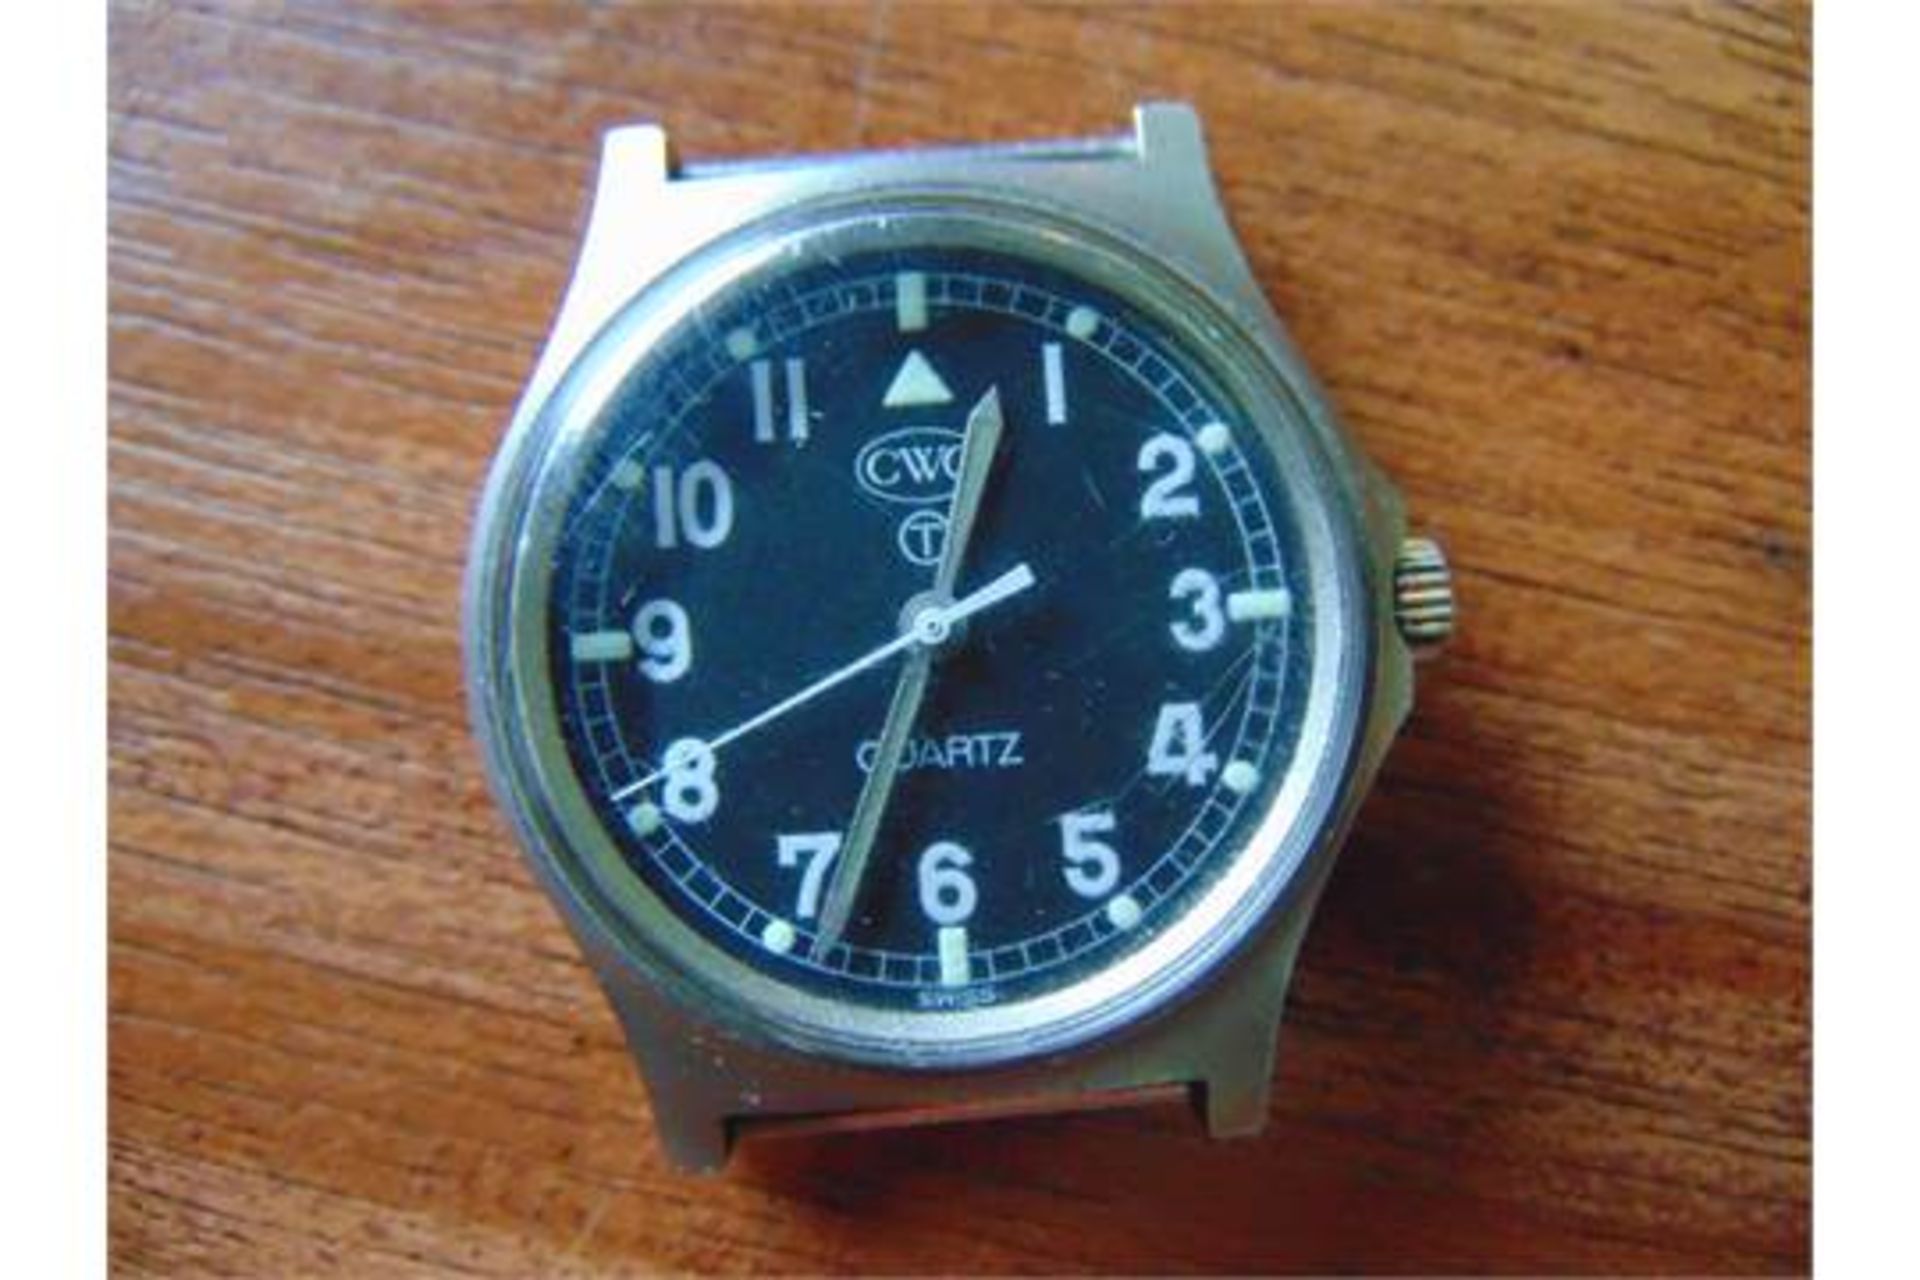 Genuine British Army CWC (Fat Boy/Fat Case) quartz wrist watch - Image 4 of 5